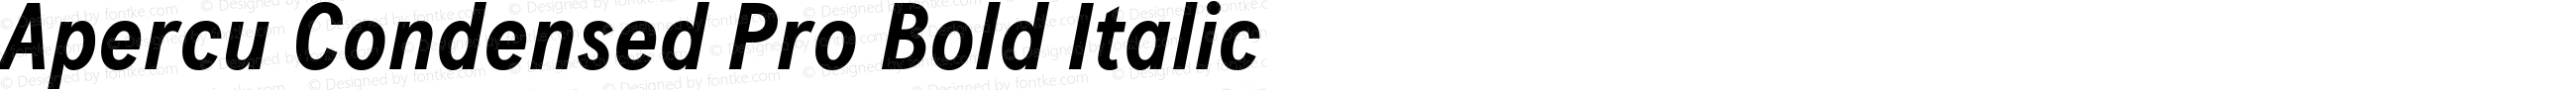 Apercu Condensed Pro Bold Italic